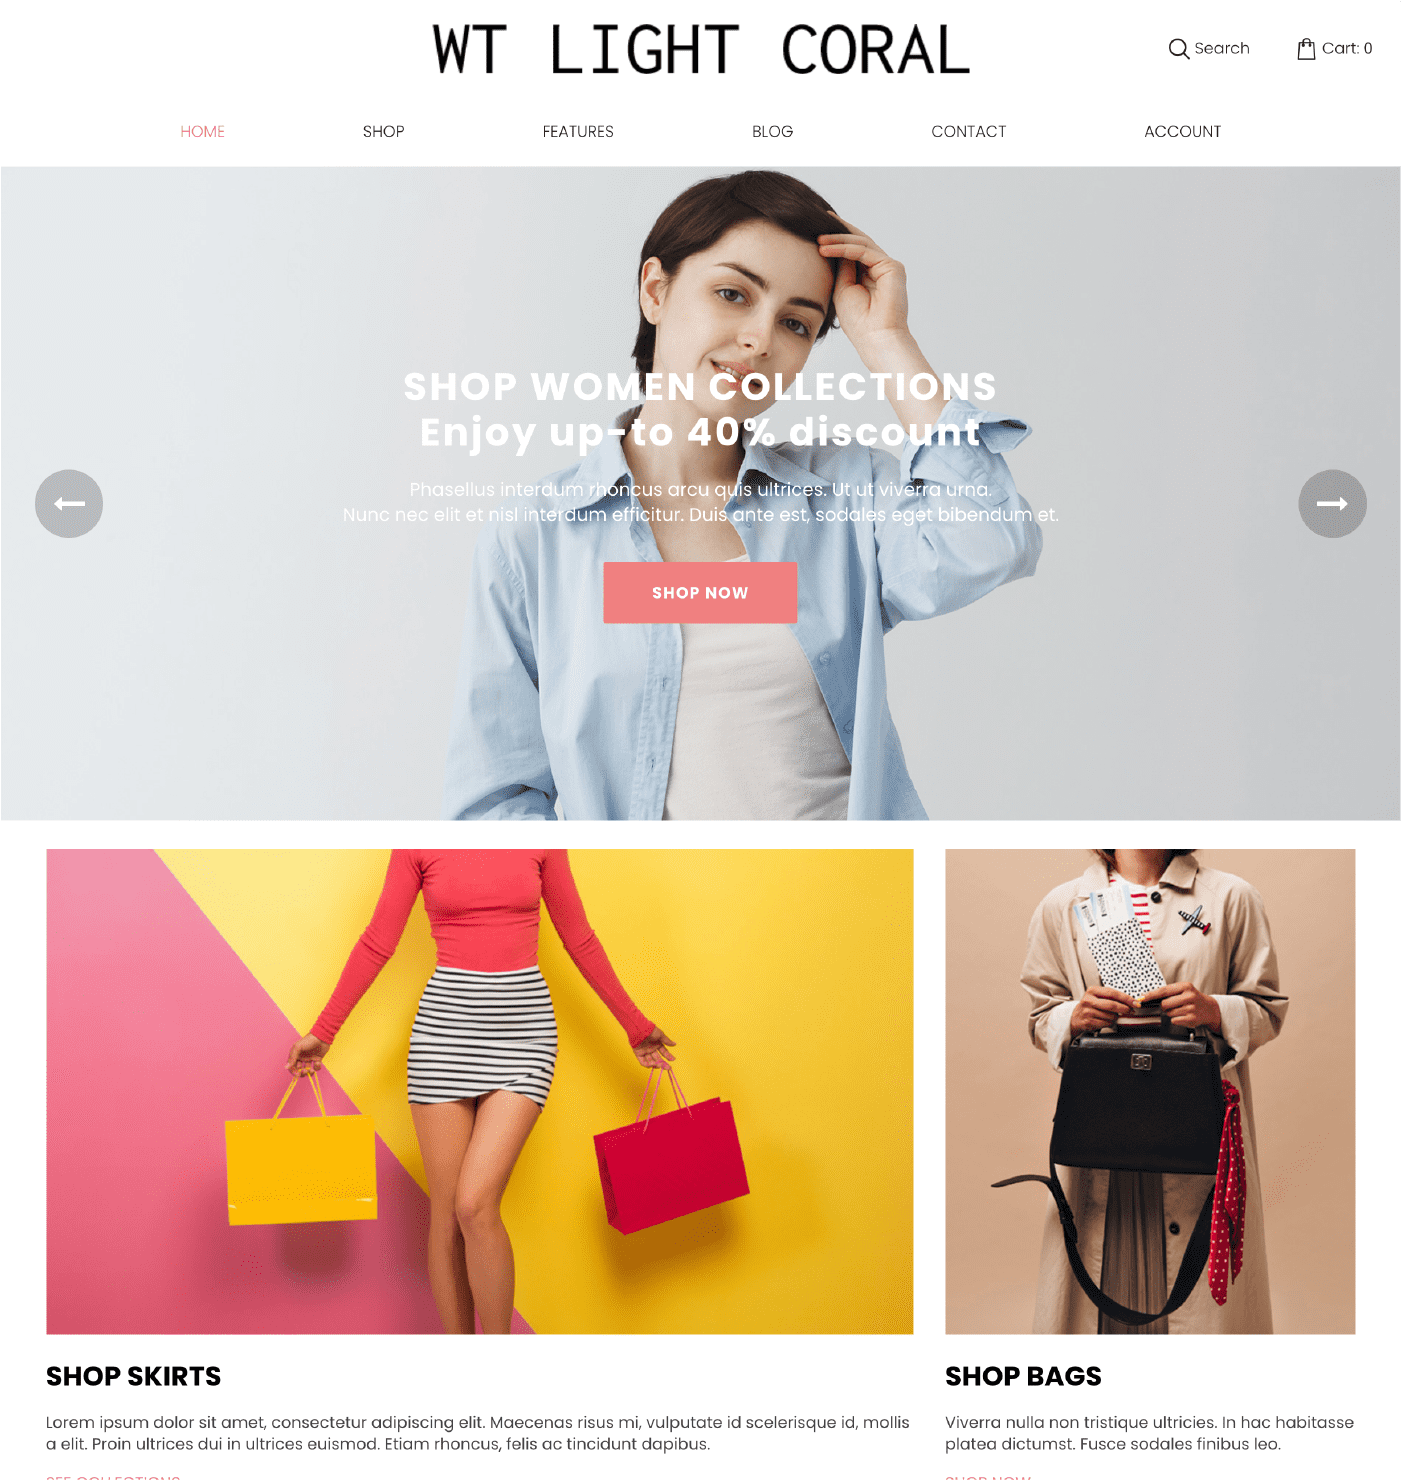 WT Lightcoral - WordPress for WooCommerce Theme